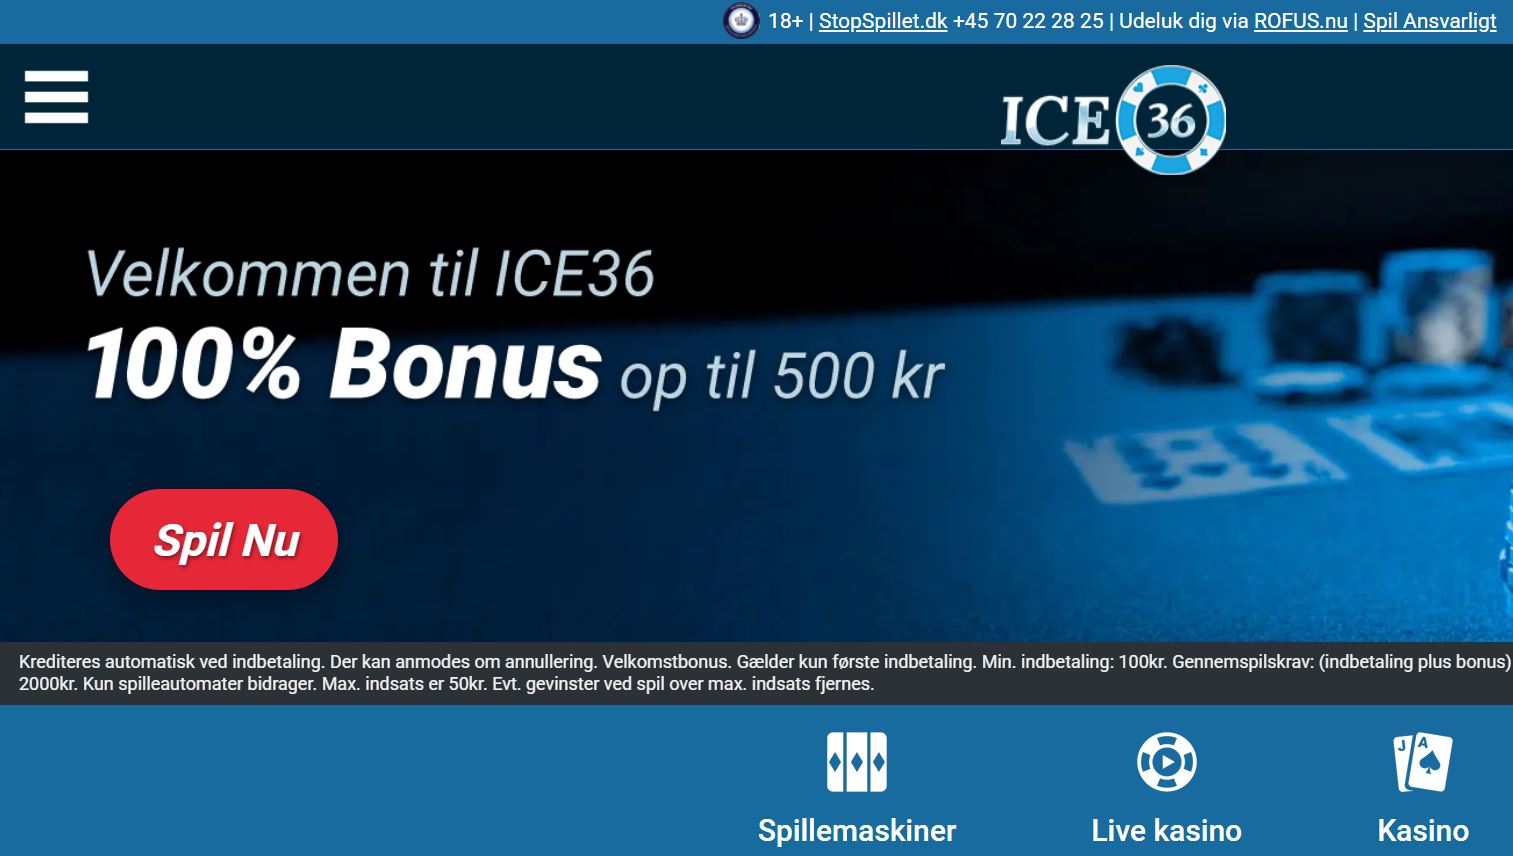 ICE36 med solid bonus